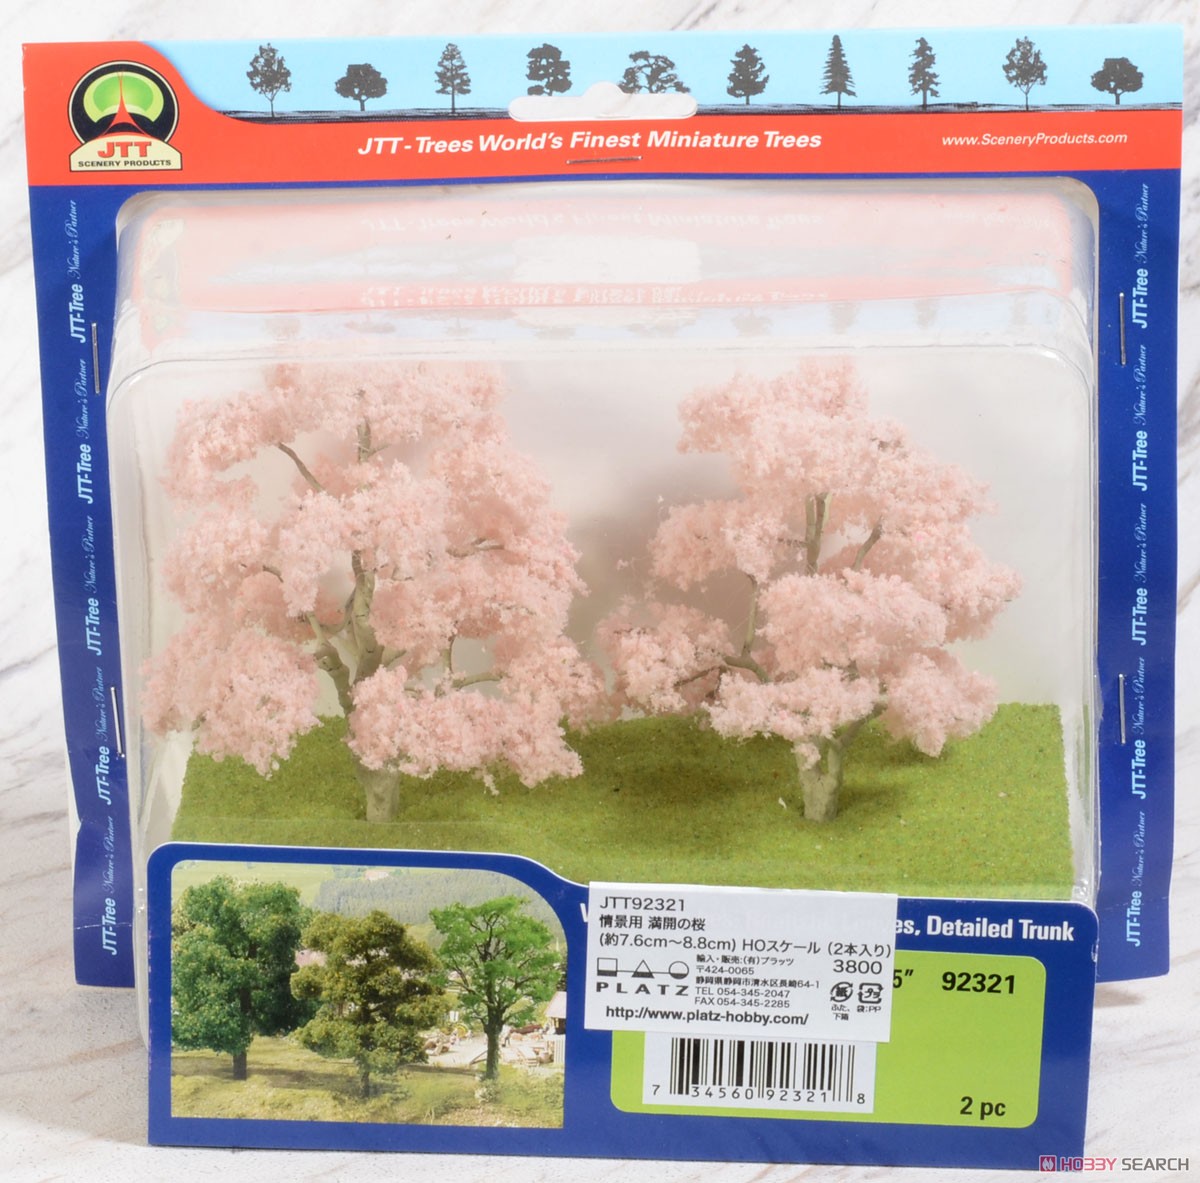 92321 (HO) 情景用 満開の桜 (約7.6cm～8.8cm) HOスケール (2本入り) (鉄道模型) 商品画像1